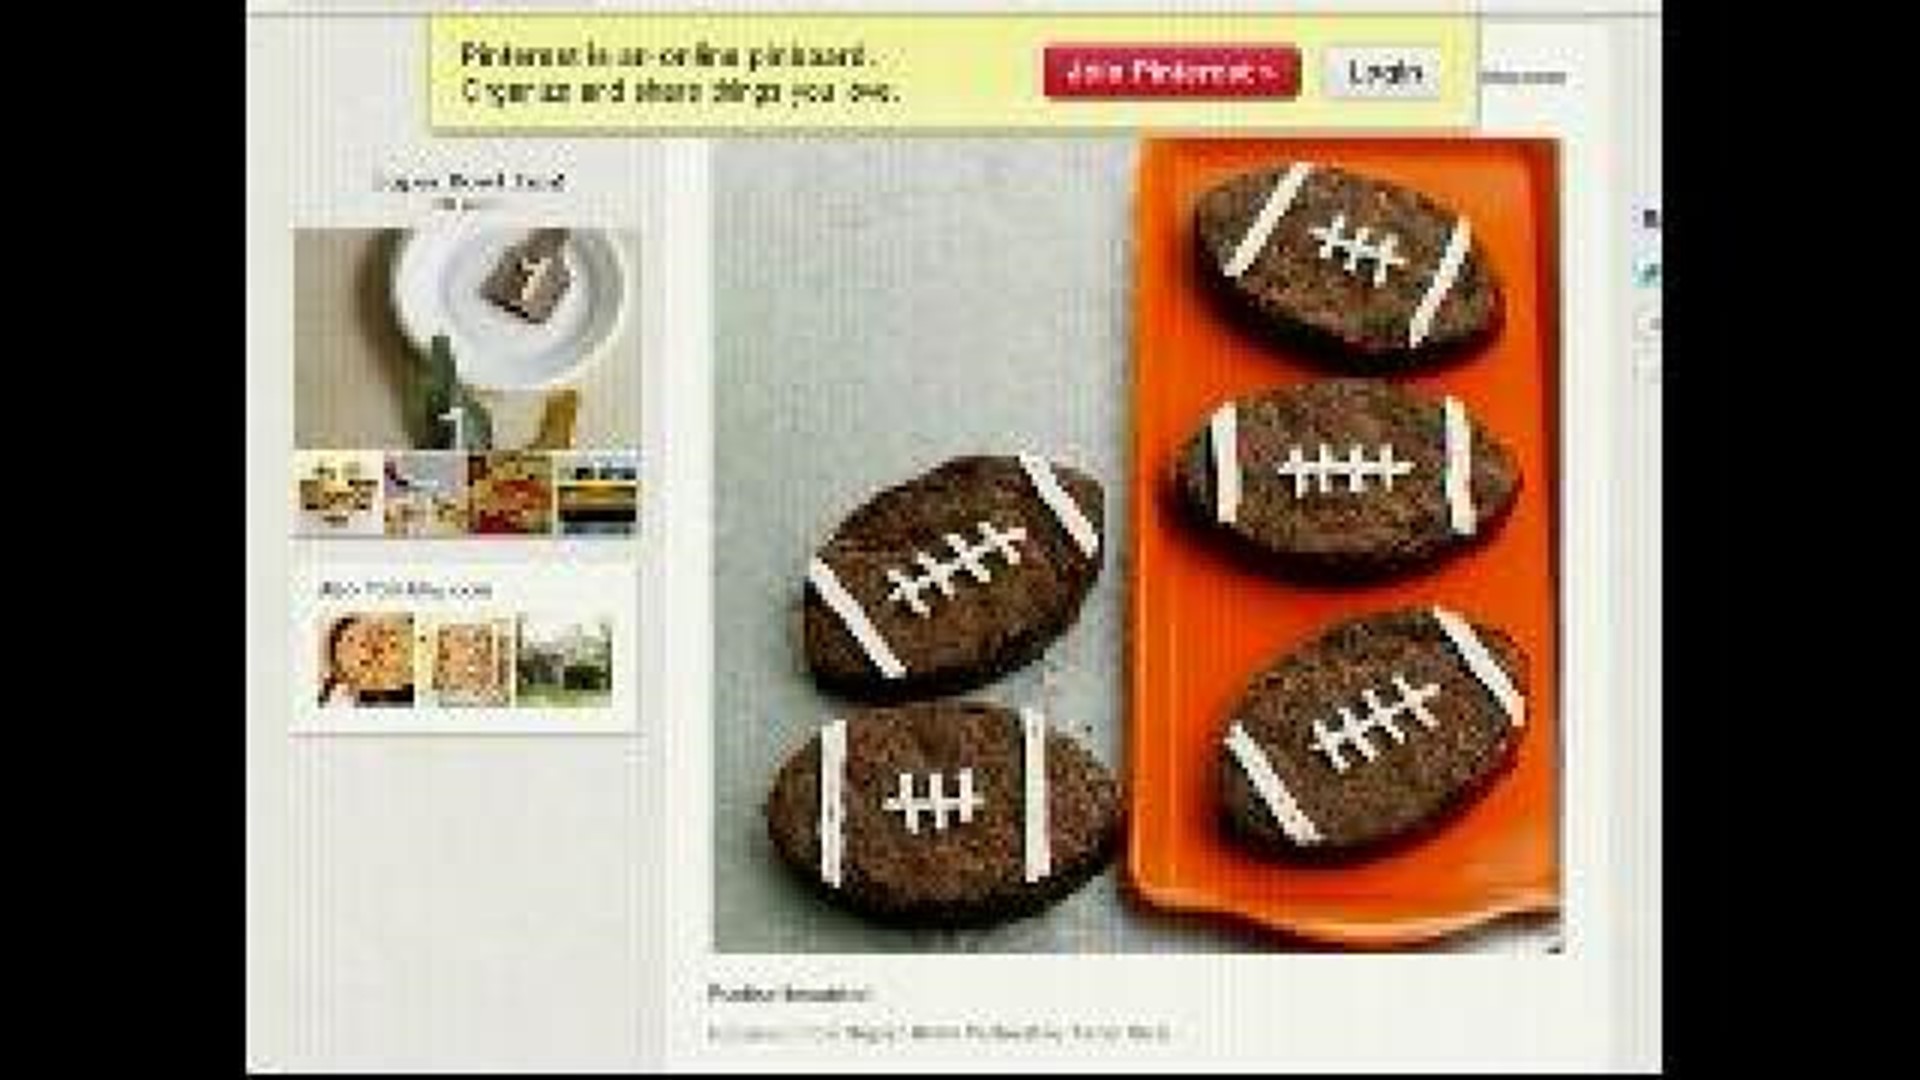 Pinterest Interest: Super Bowl Desserts